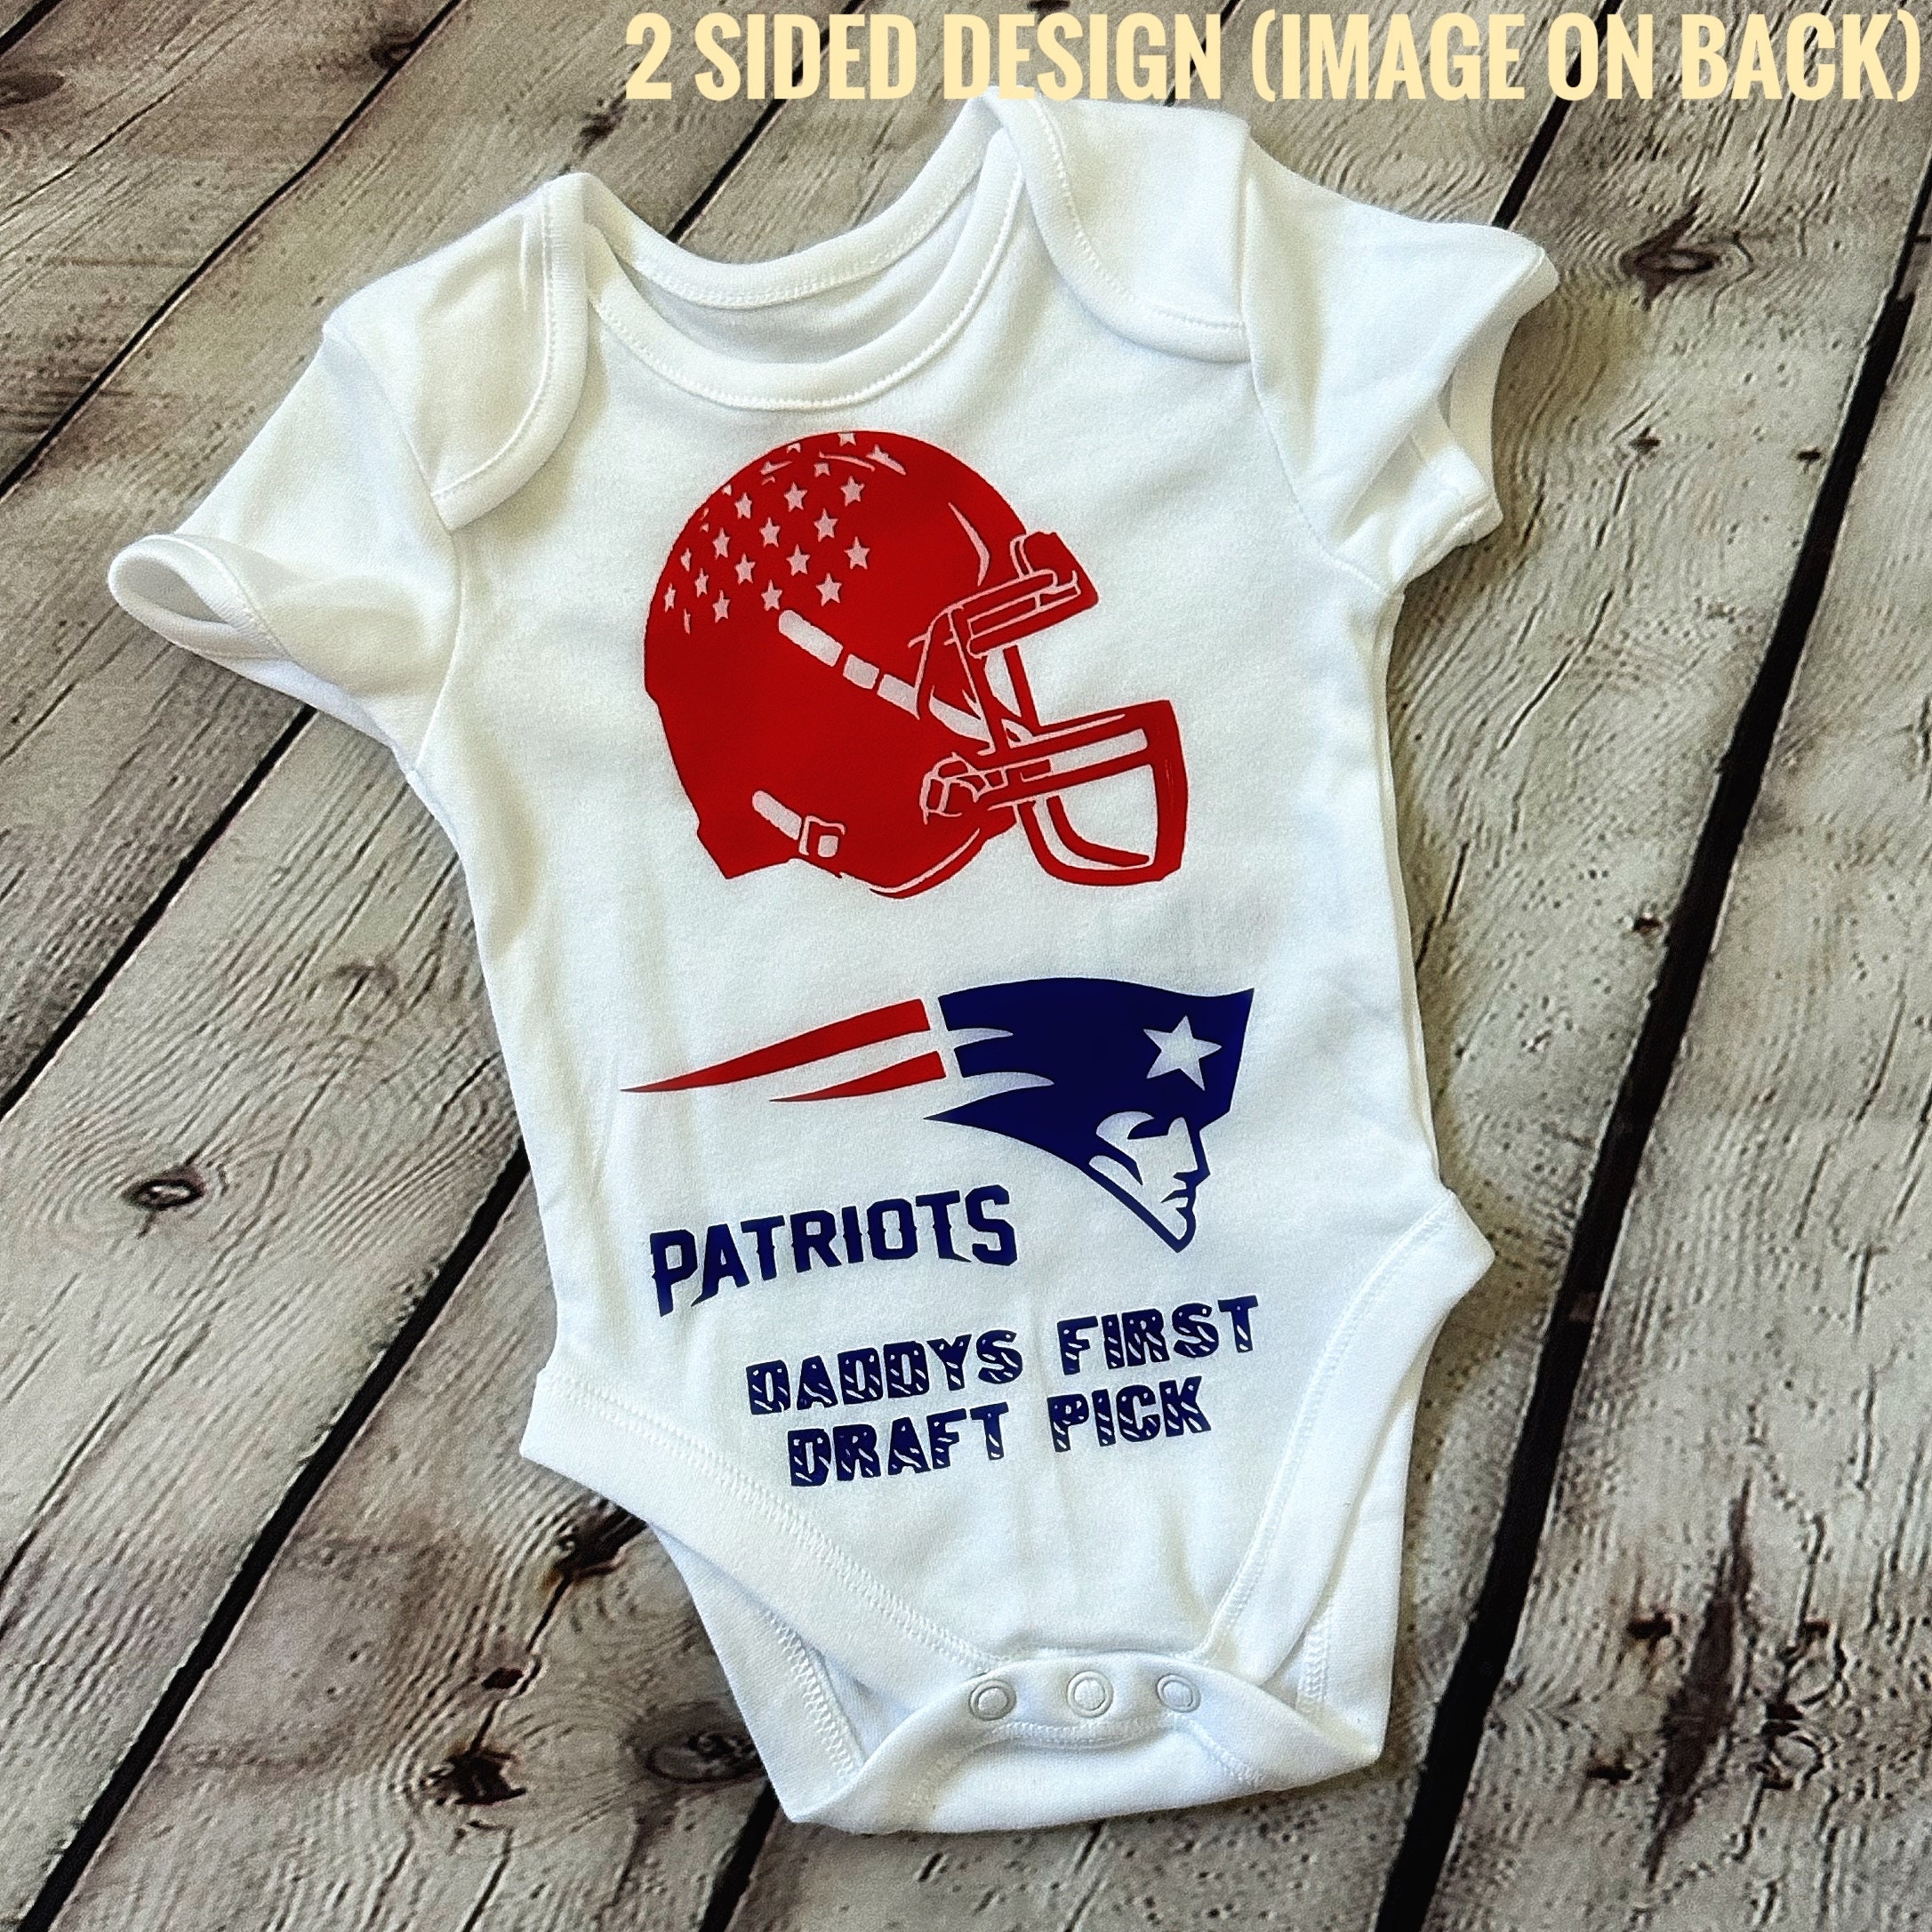 NFL Team Apparel Infant Philadelphia Eagles Redzone T-Shirt Set